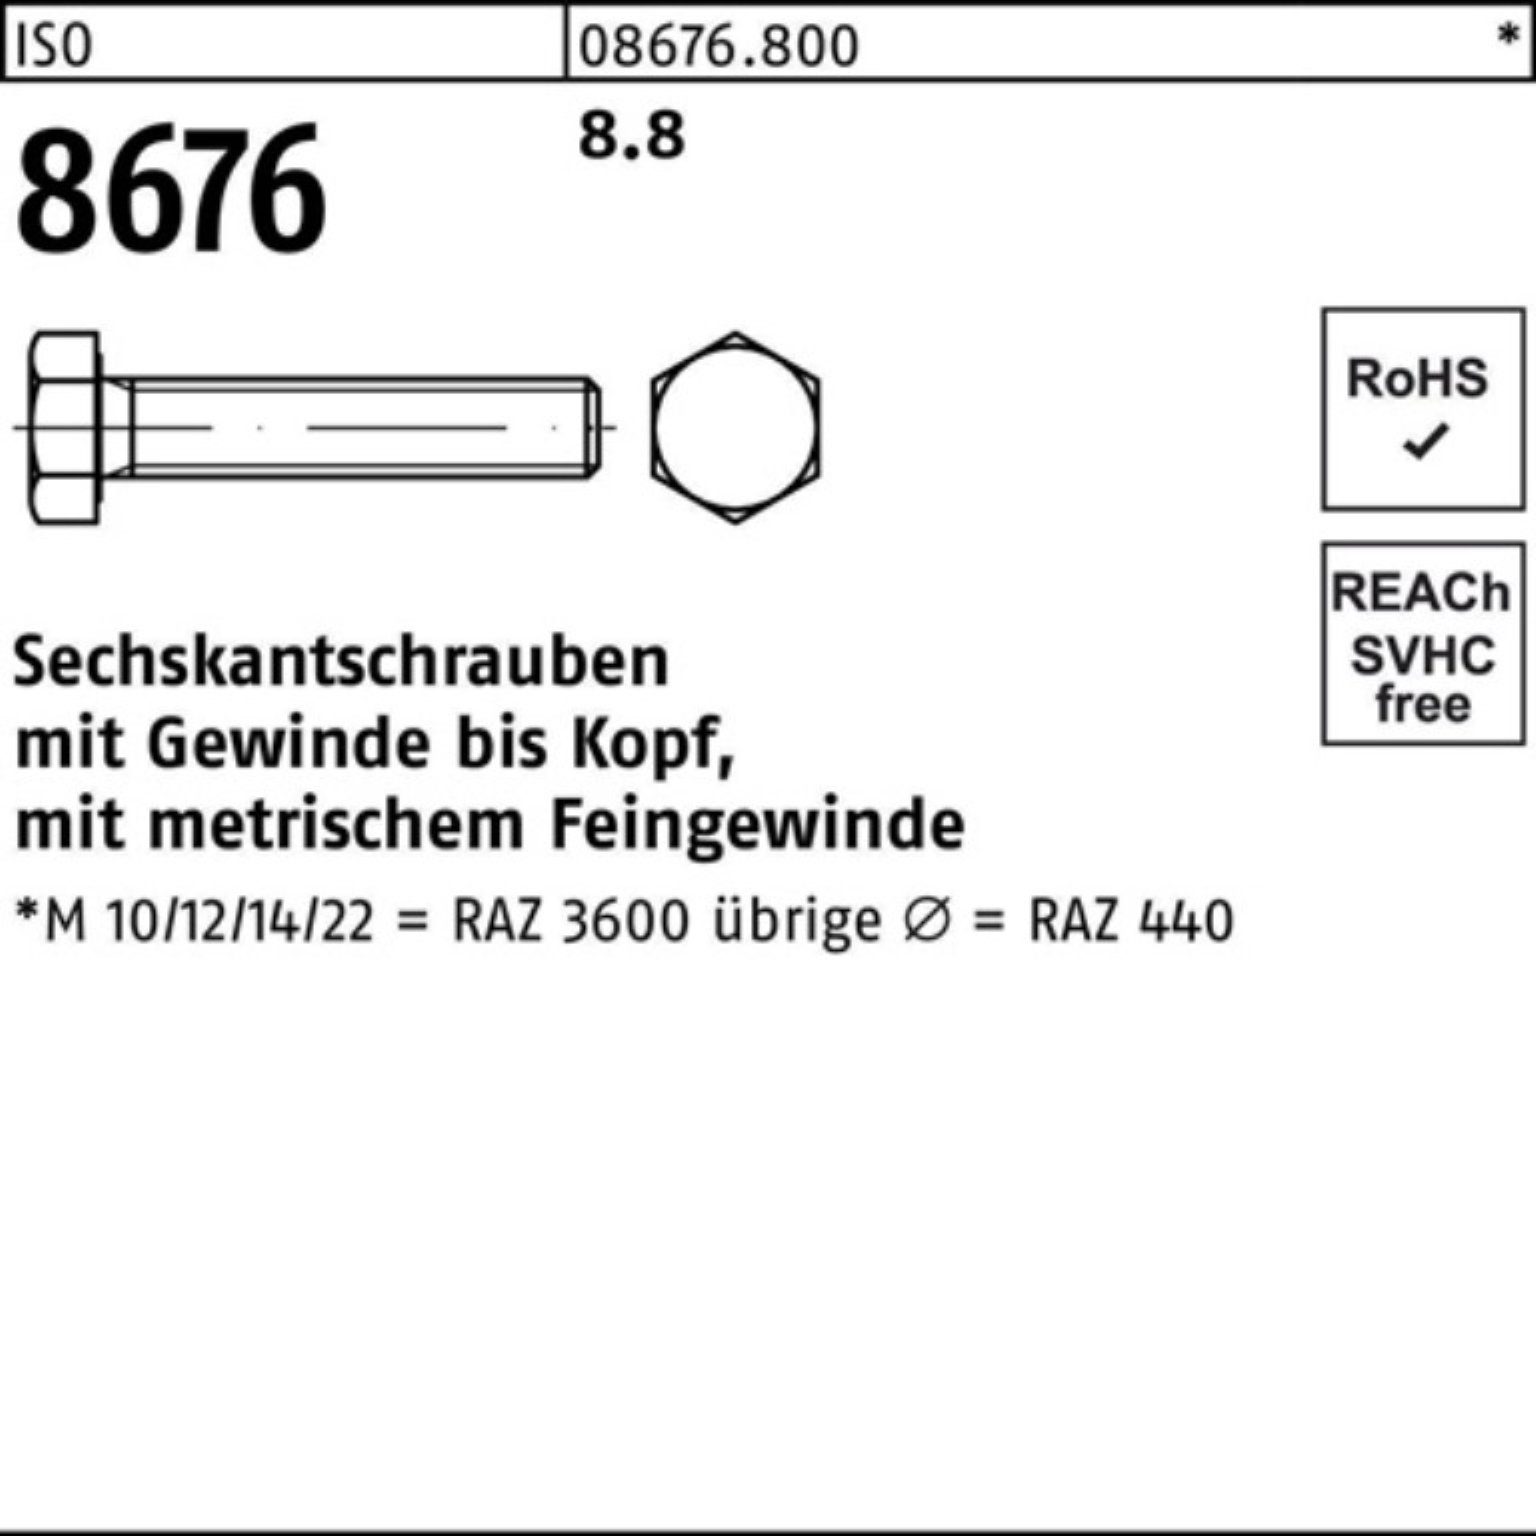 Reyher Sechskantschraube 100er Pack 8.8 55 M20x2x Sechskantschraube 25 8 VG 8676 ISO ISO Stück